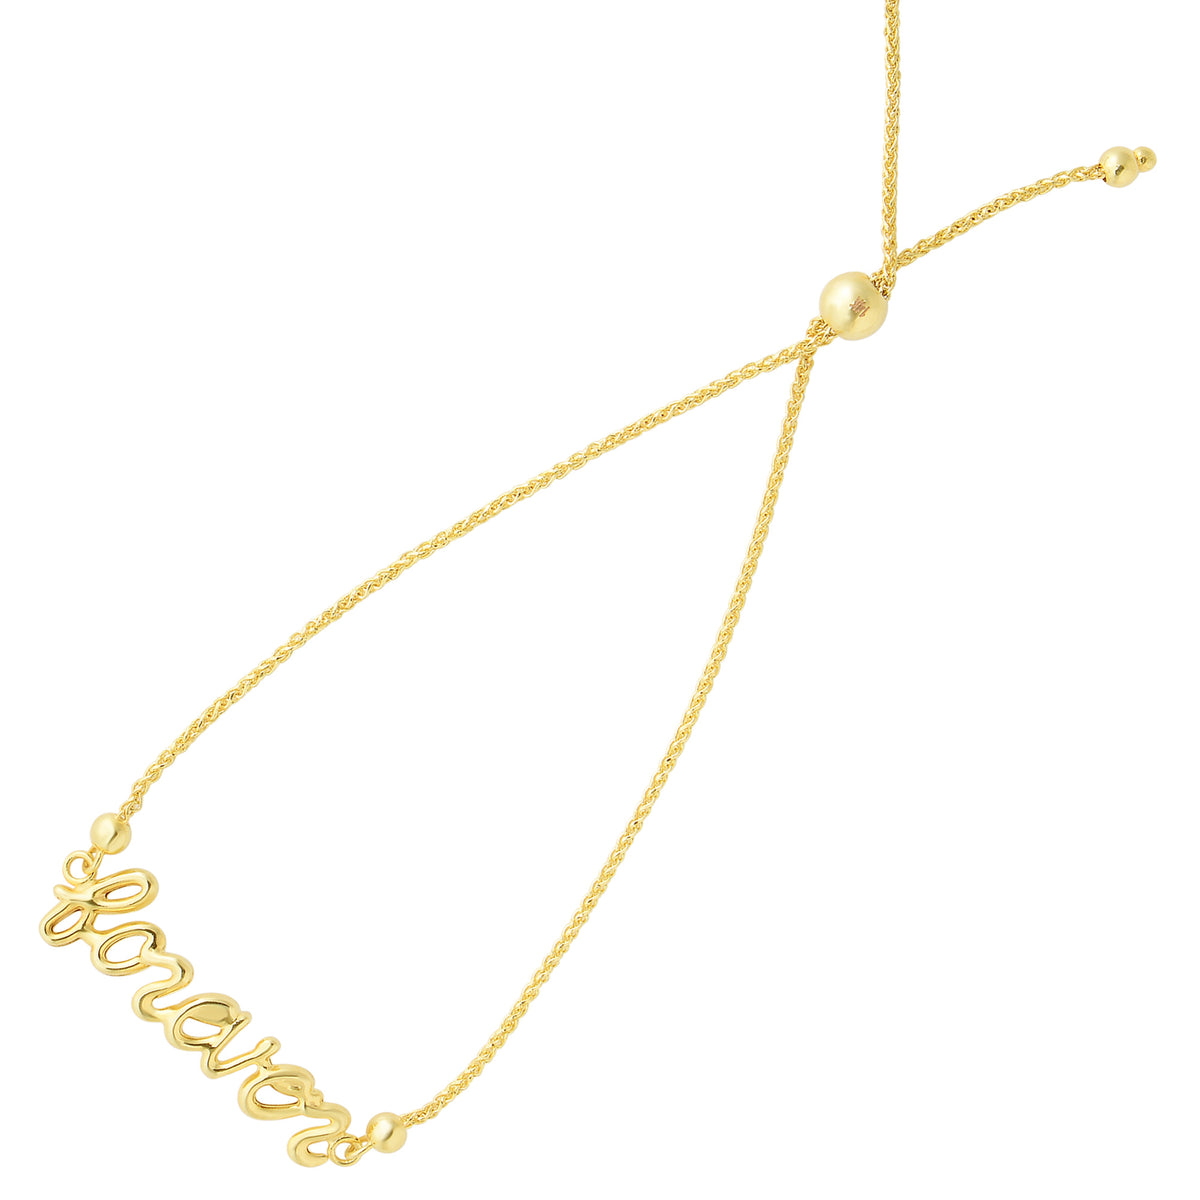 Forever In Script Element Bolo Friendship Adjustable Bracelet In 14K Yellow Gold, 9.25" fine designer jewelry for men and women